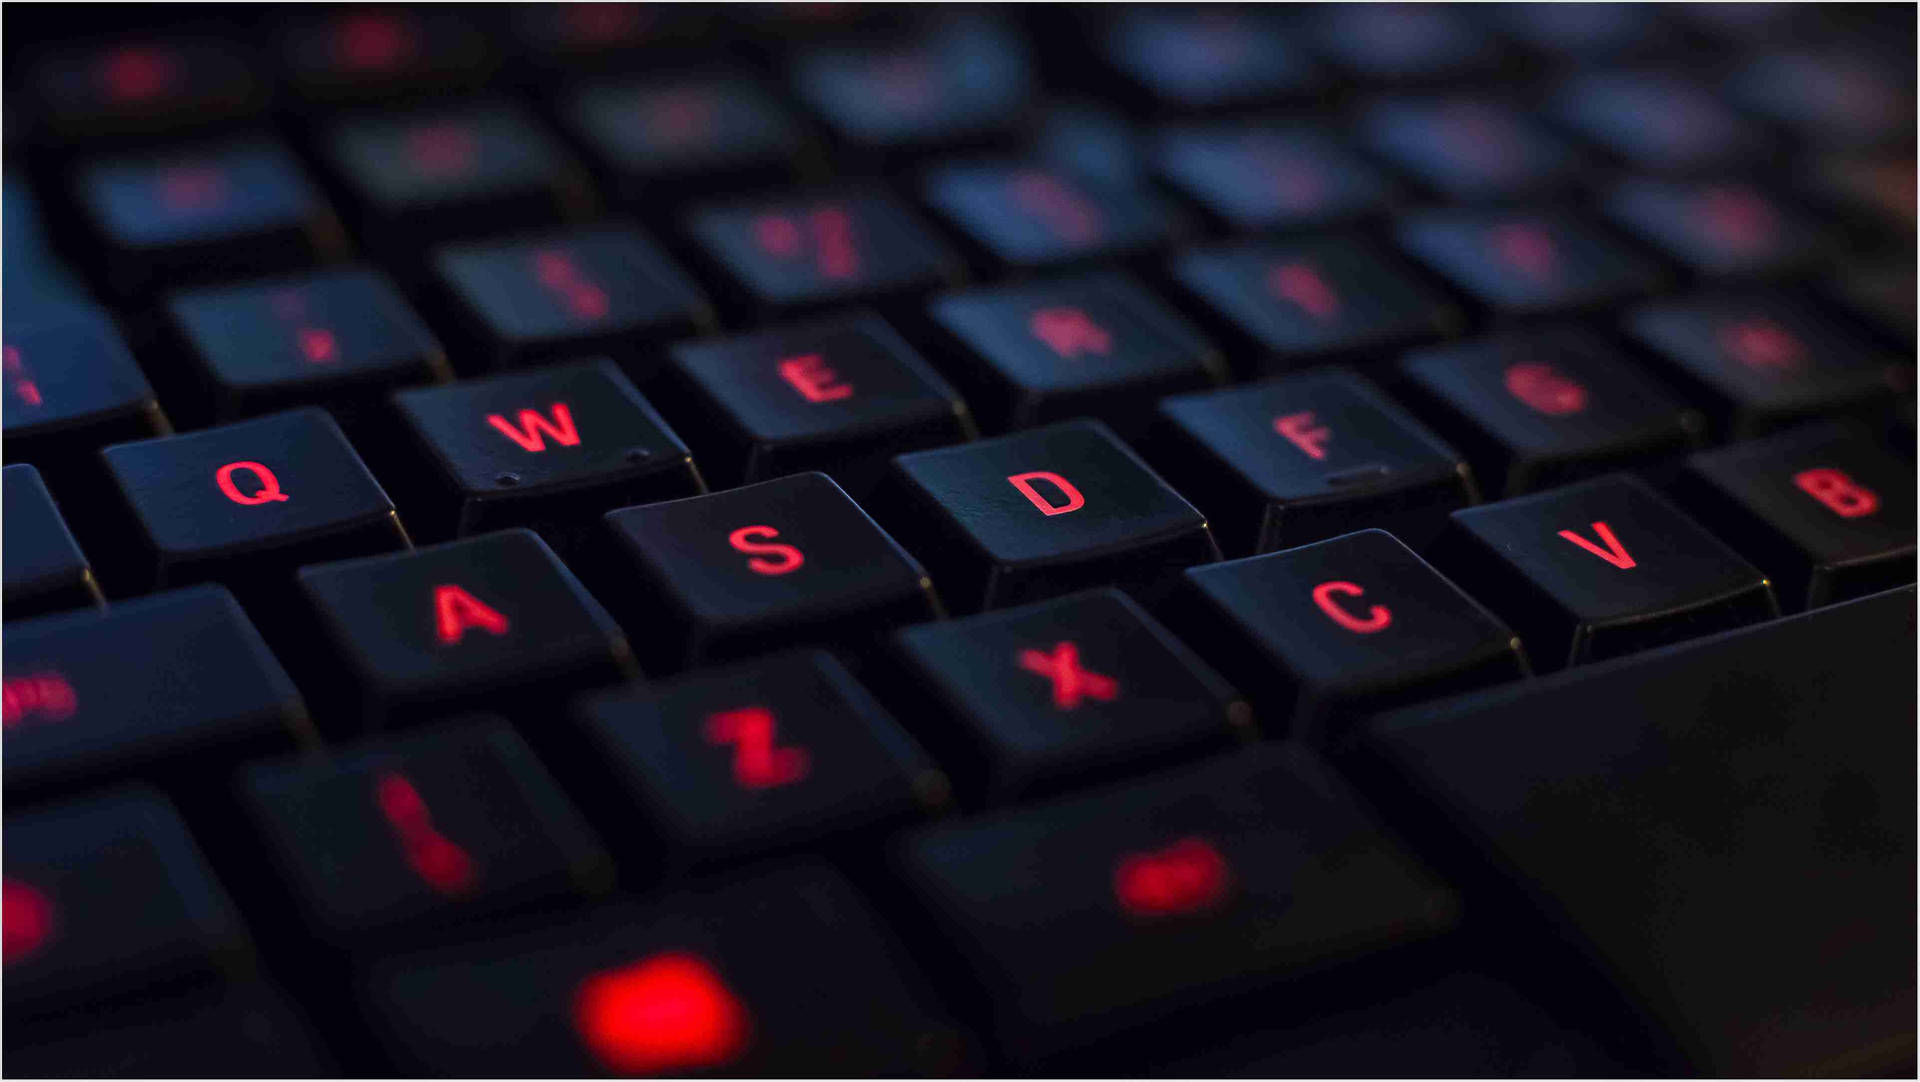 Fiery Red Light Computer Keyboard Background